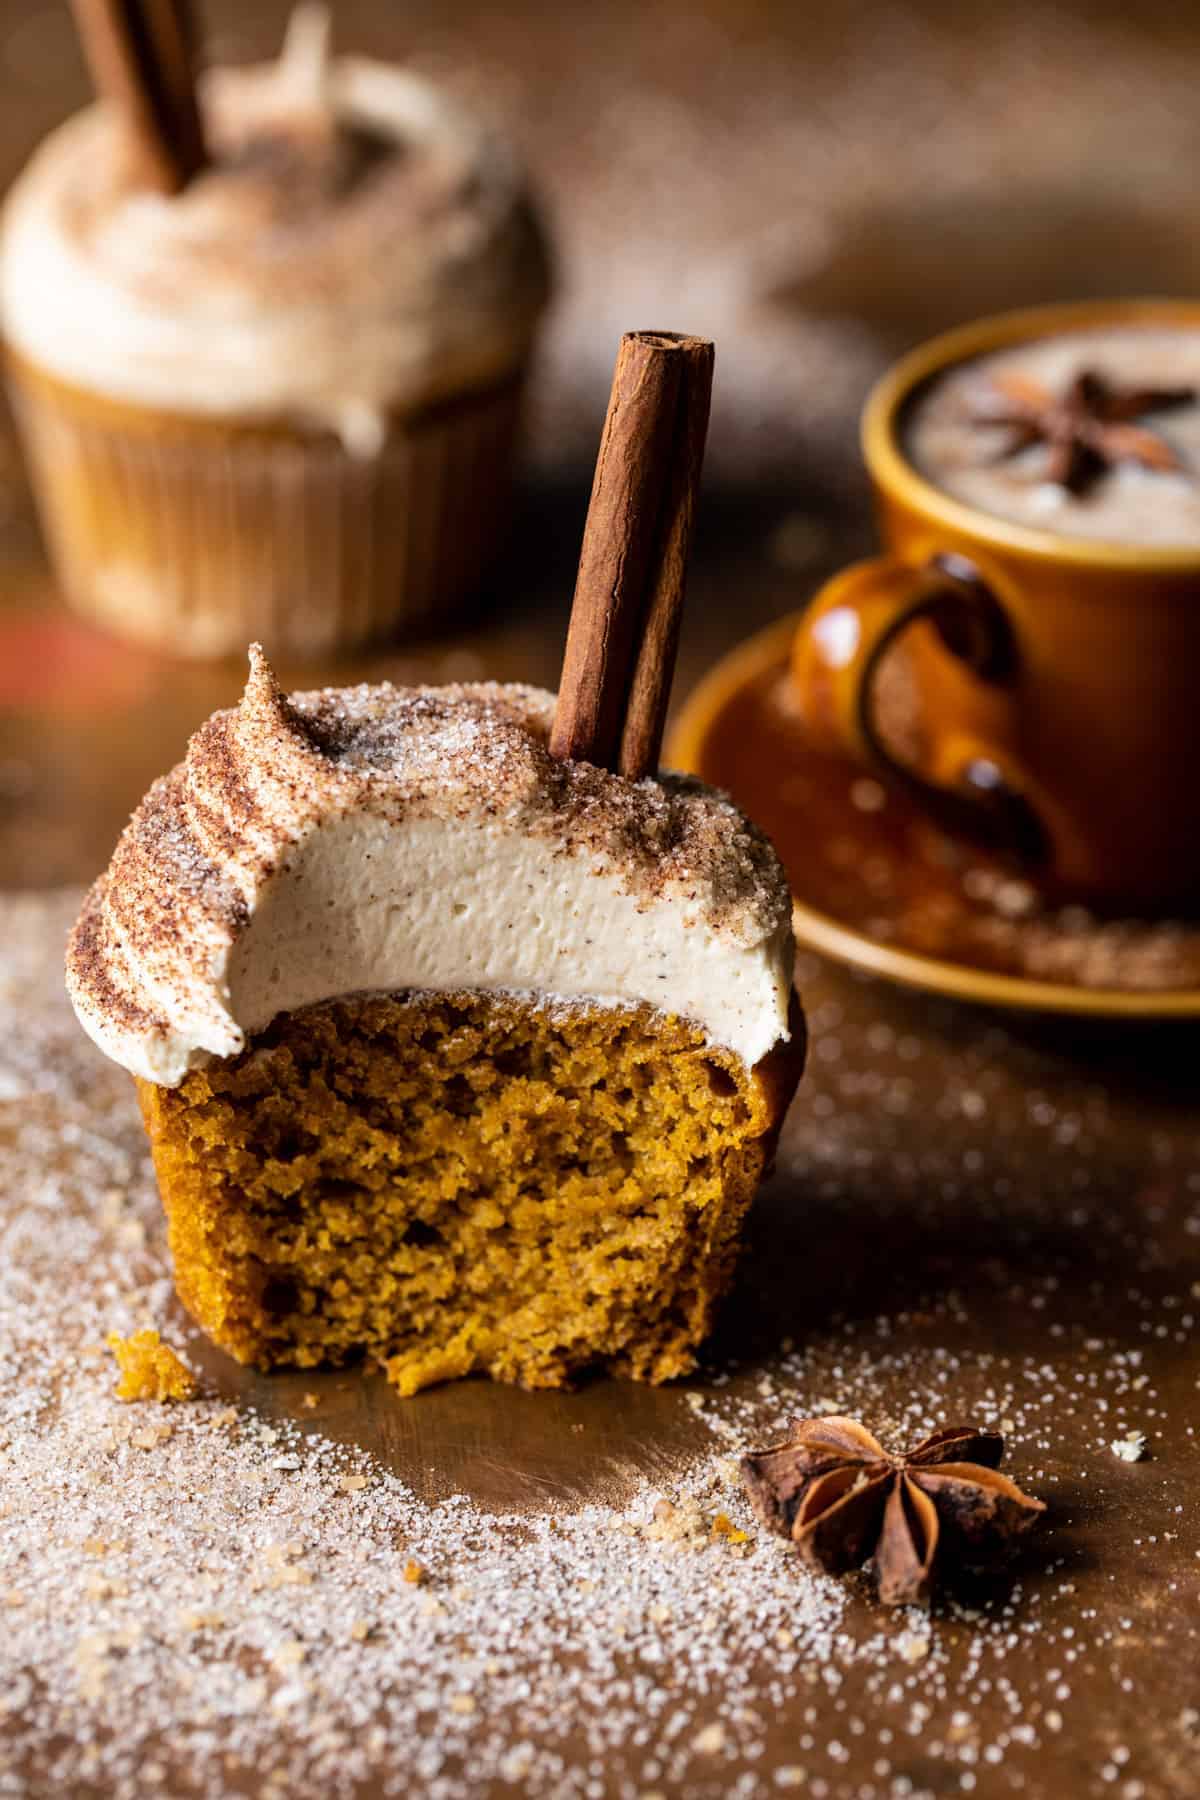 Vanilla Chai Pumpkin Latte Cupcakes with Cinnamon Brown Sugar Frosting | halfbakedhavest.com